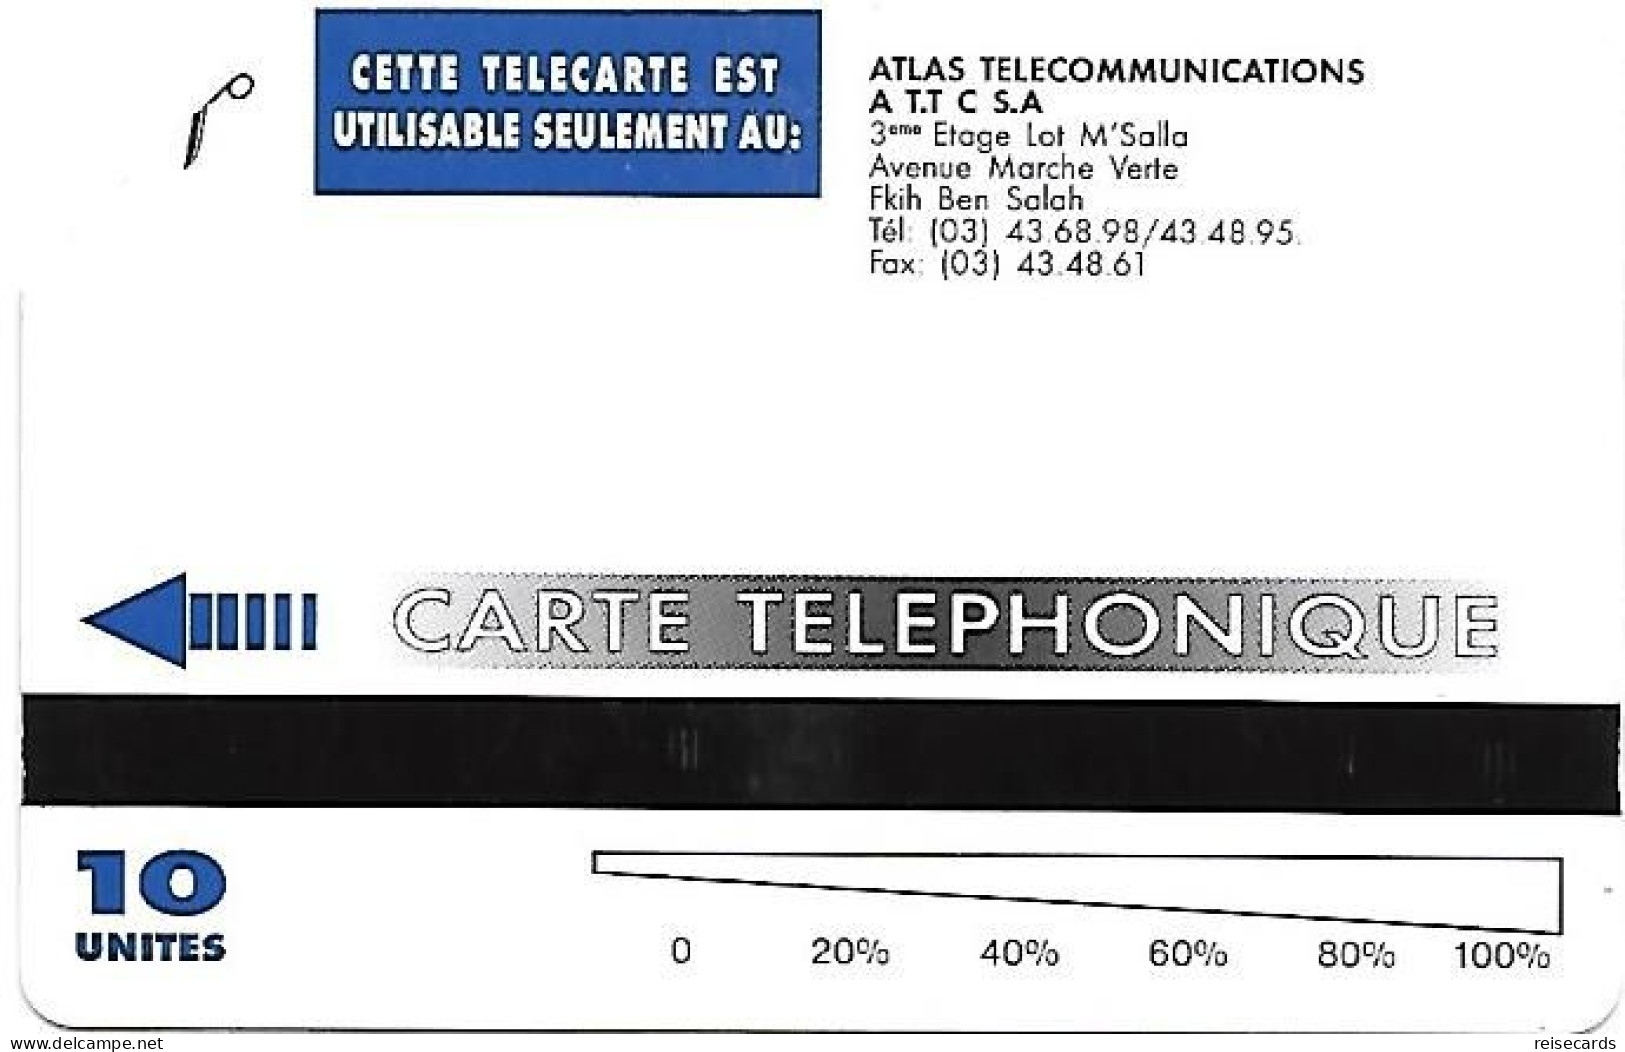 Morocco: Atlas Telecommunications - Beni Mellal - Maroc